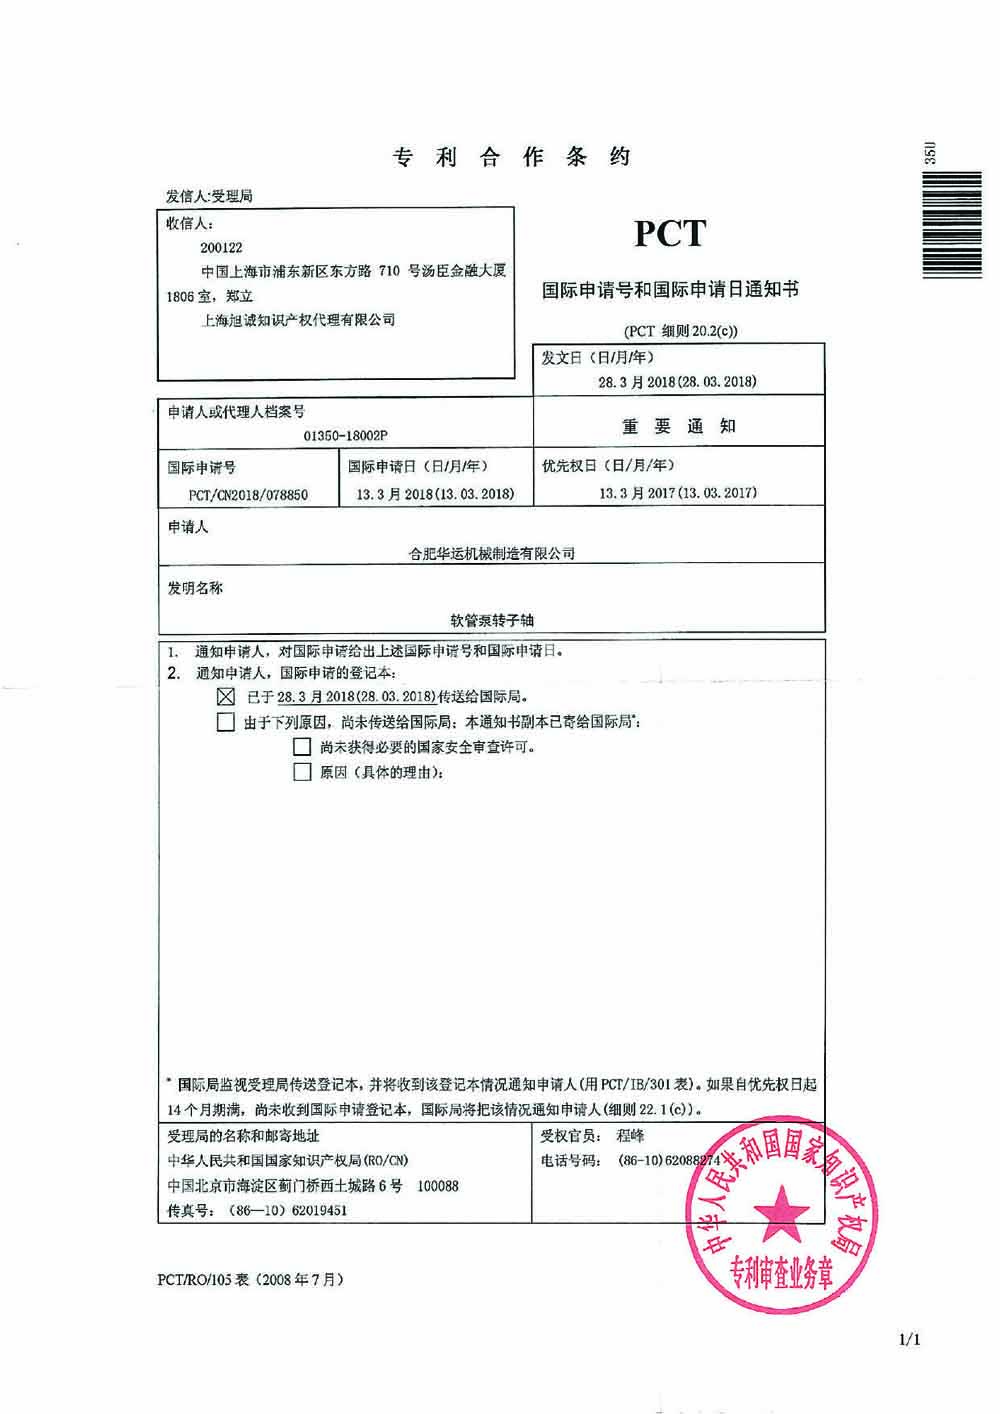 PCT international patent 